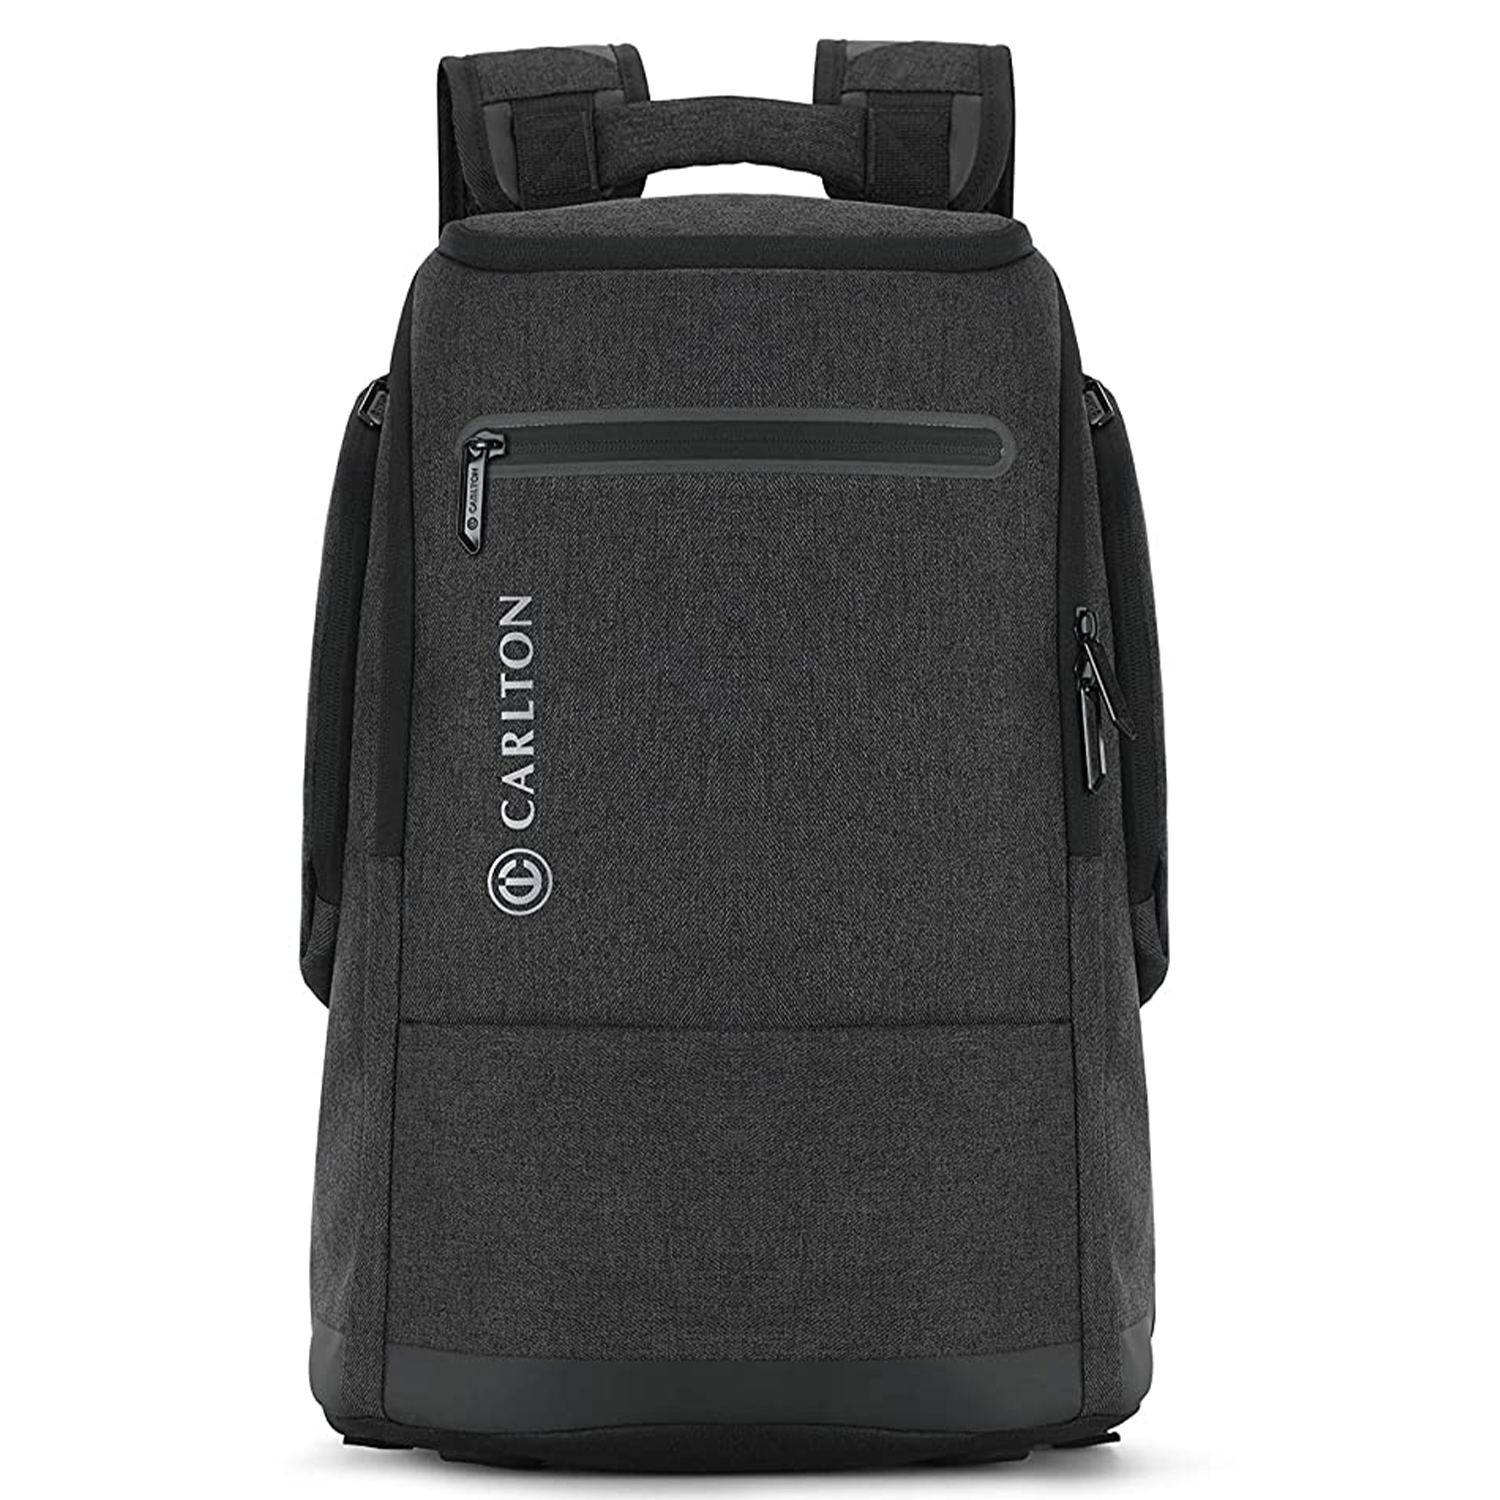 RoshanBags_Carlton Newport 01 26 Ltrs Granite Laptop Backpack With Raincover